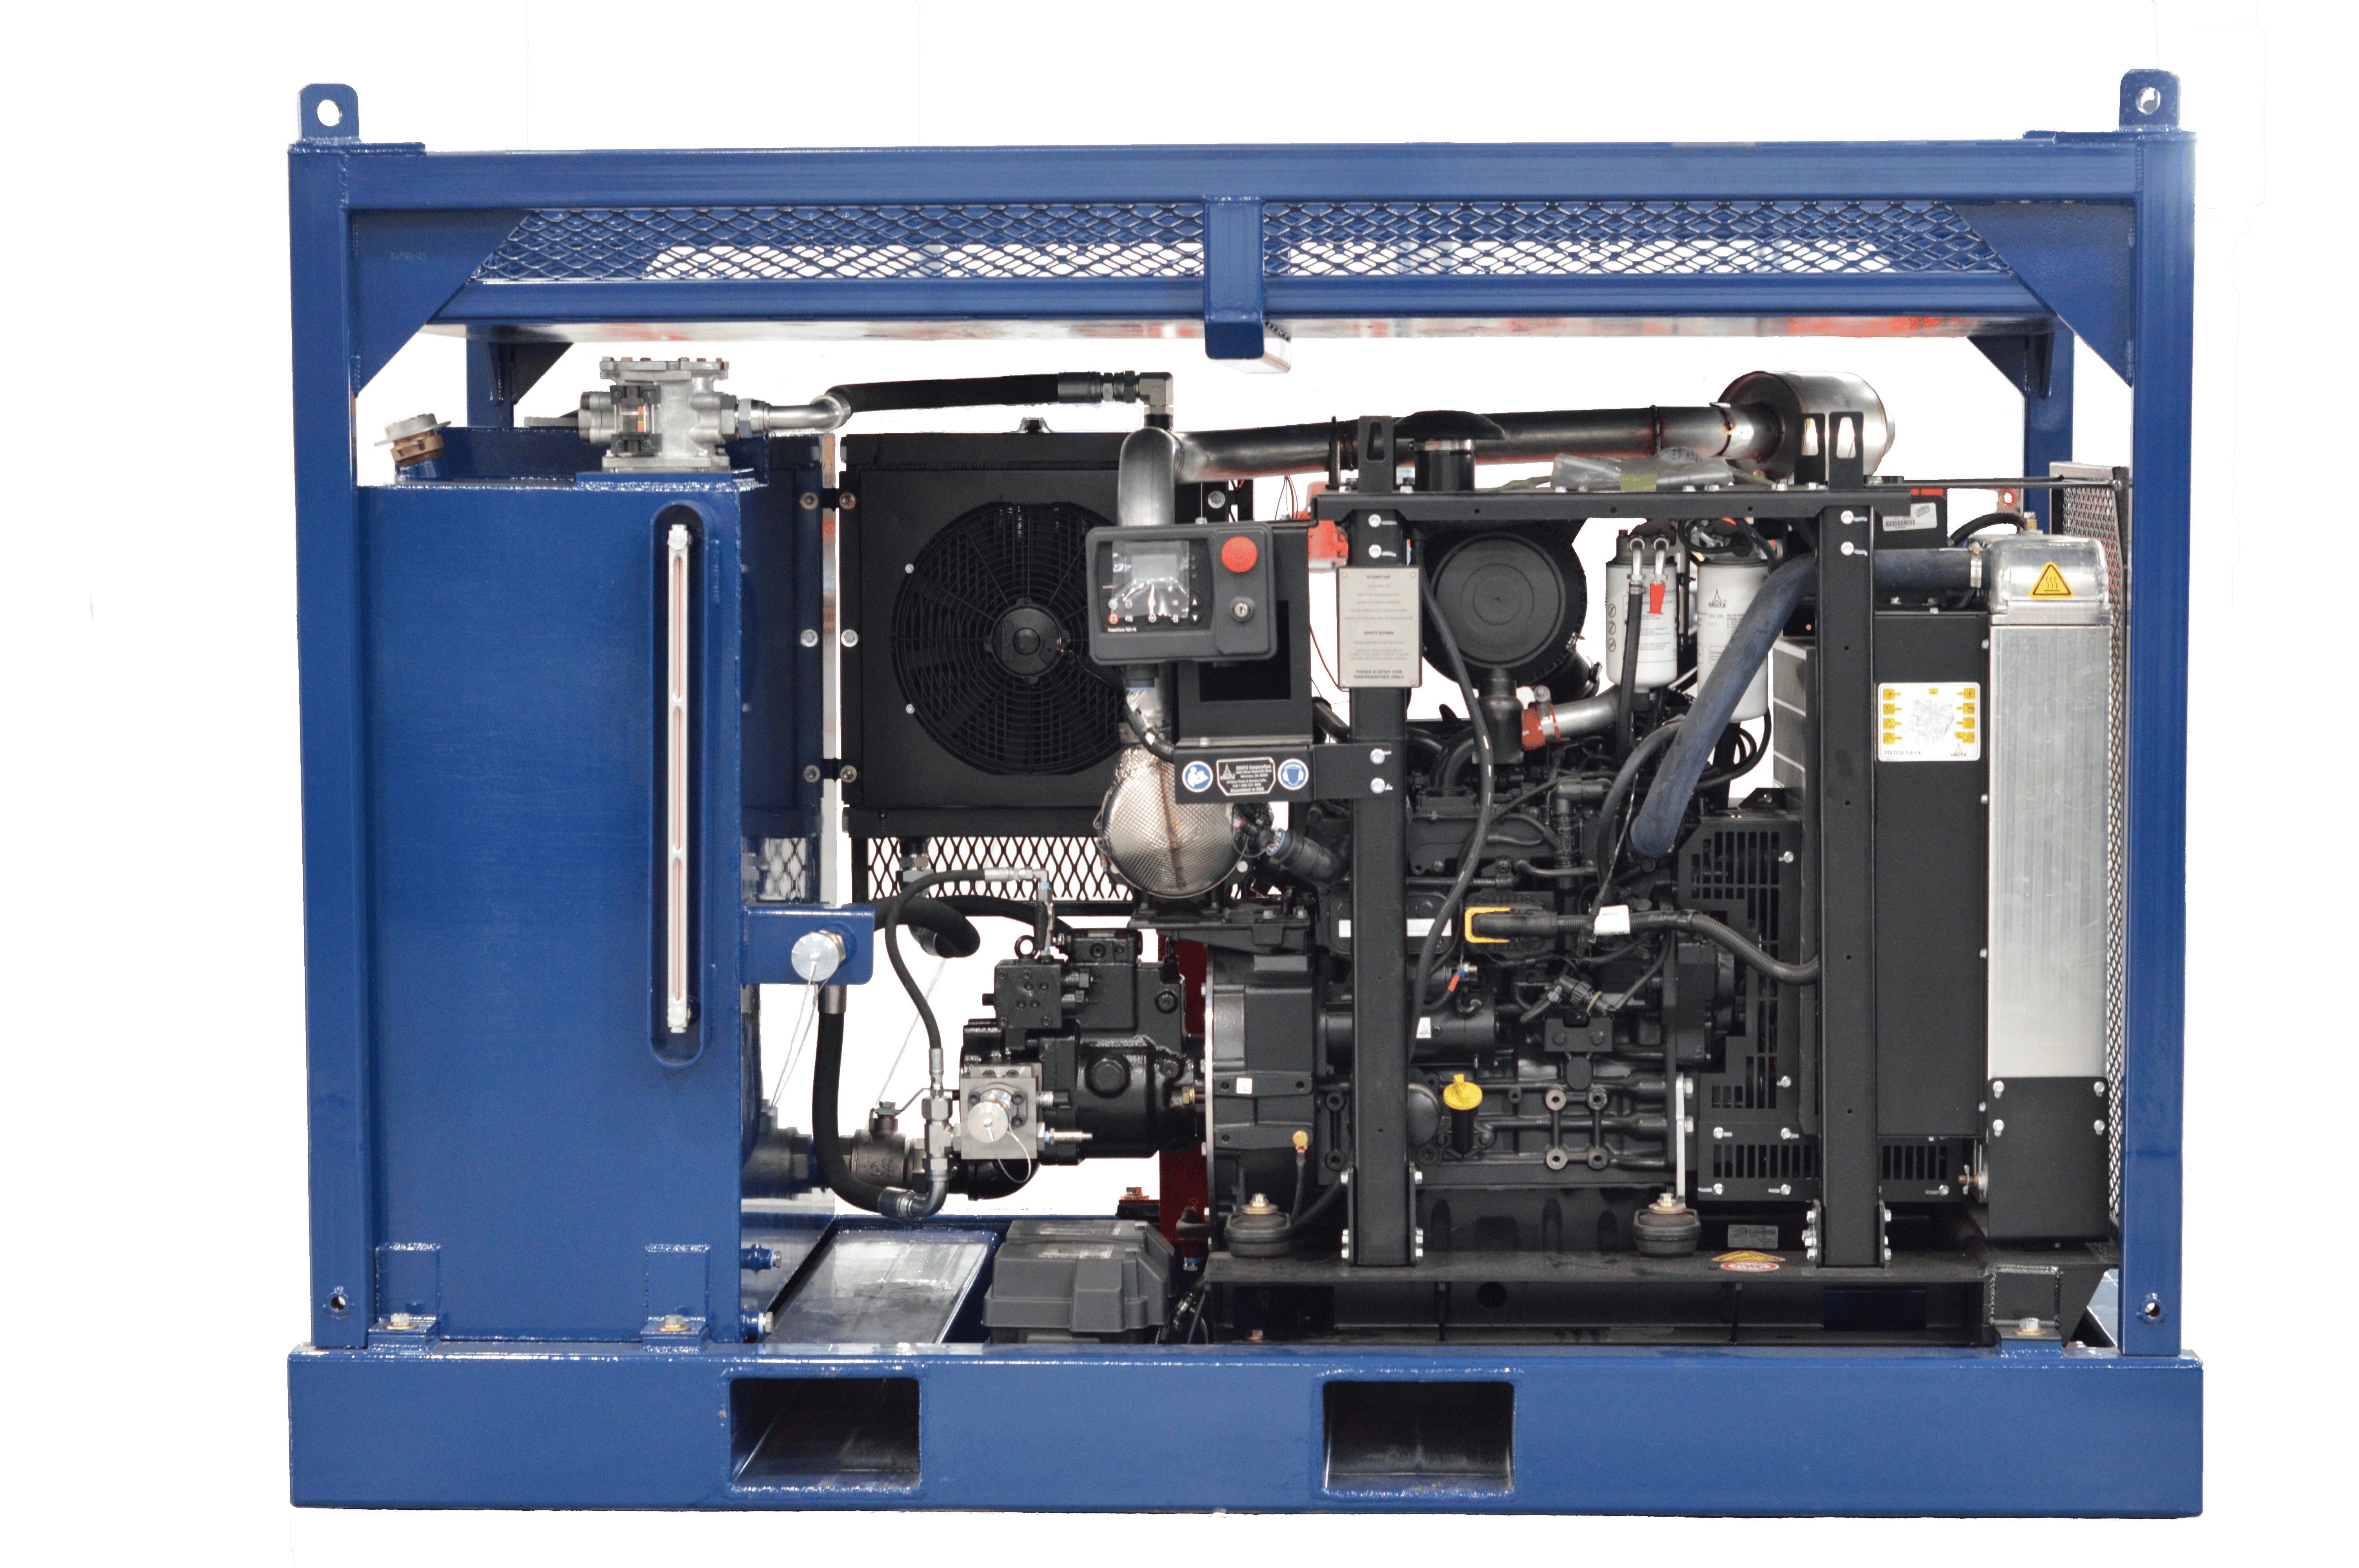 TI MFG Deutz Turbo 3.6, 4 Cyl. Diesel Power Unit - Tier IV Final